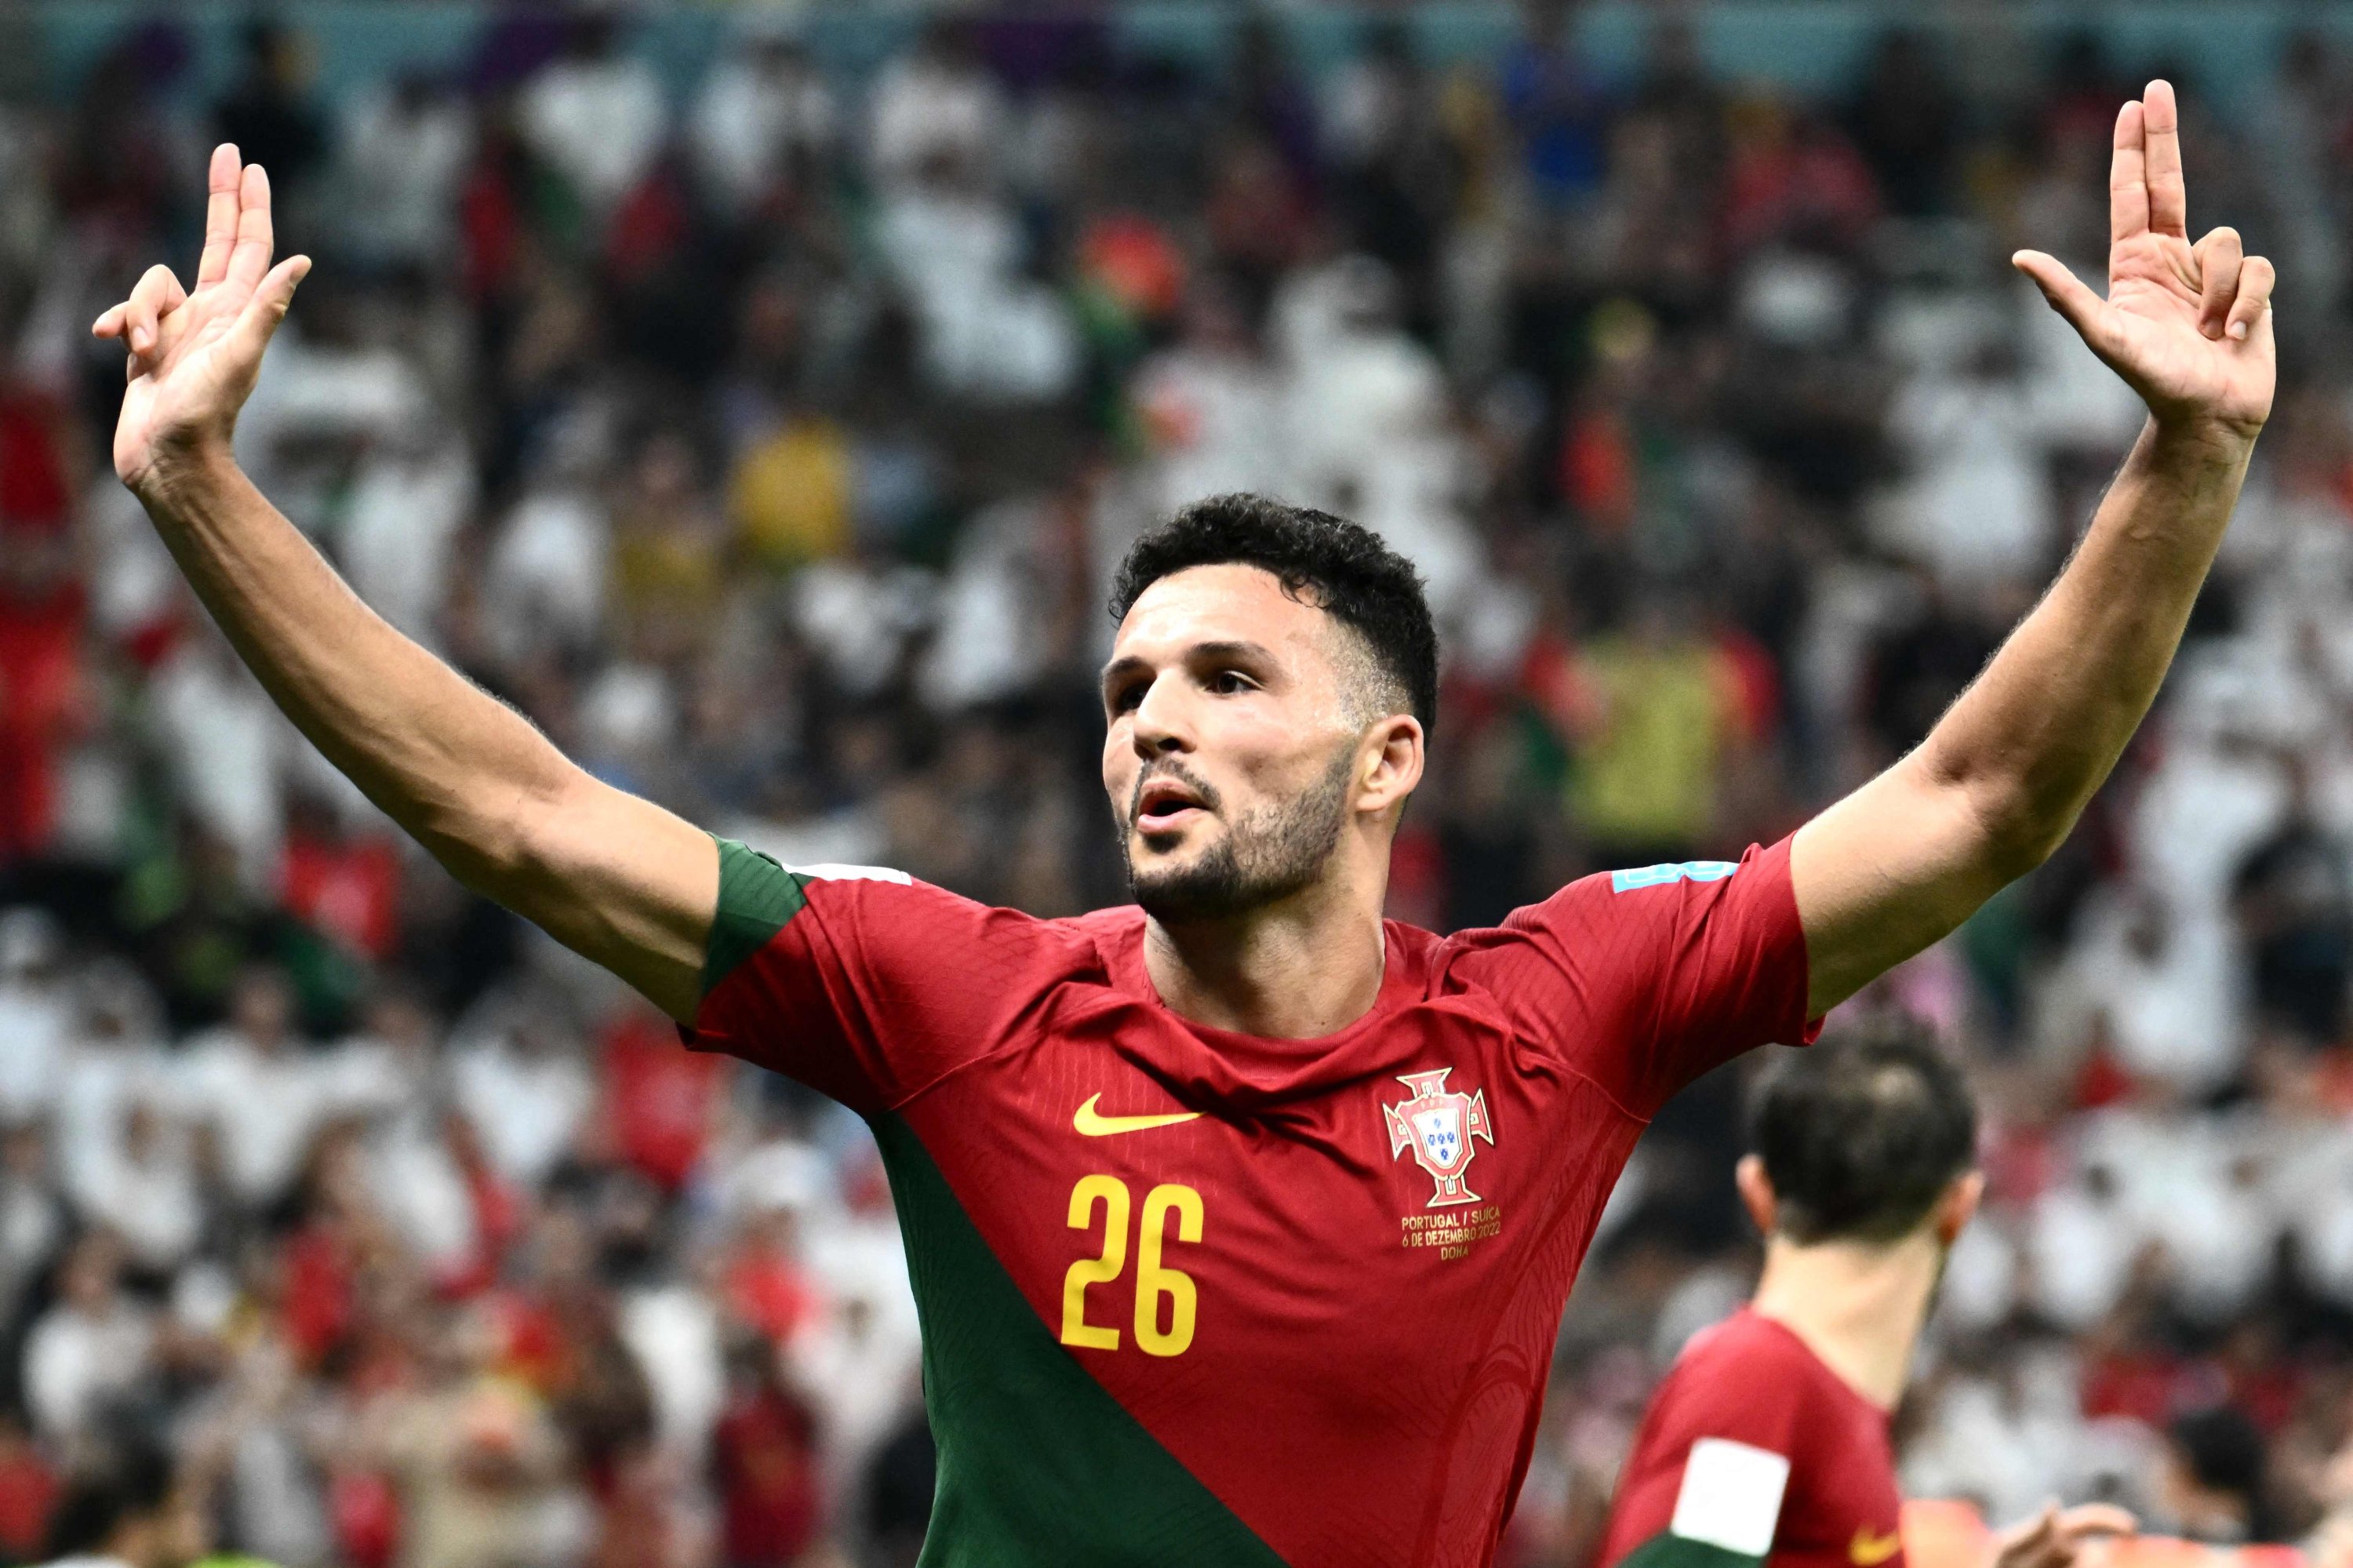 Goncalo Ramos dari Portugal merayakan golnya dalam pertandingan Piala Dunia Qatar 2022 melawan Swiss, Lusail, Qatar, 6 Desember 2022. (Foto AFP)